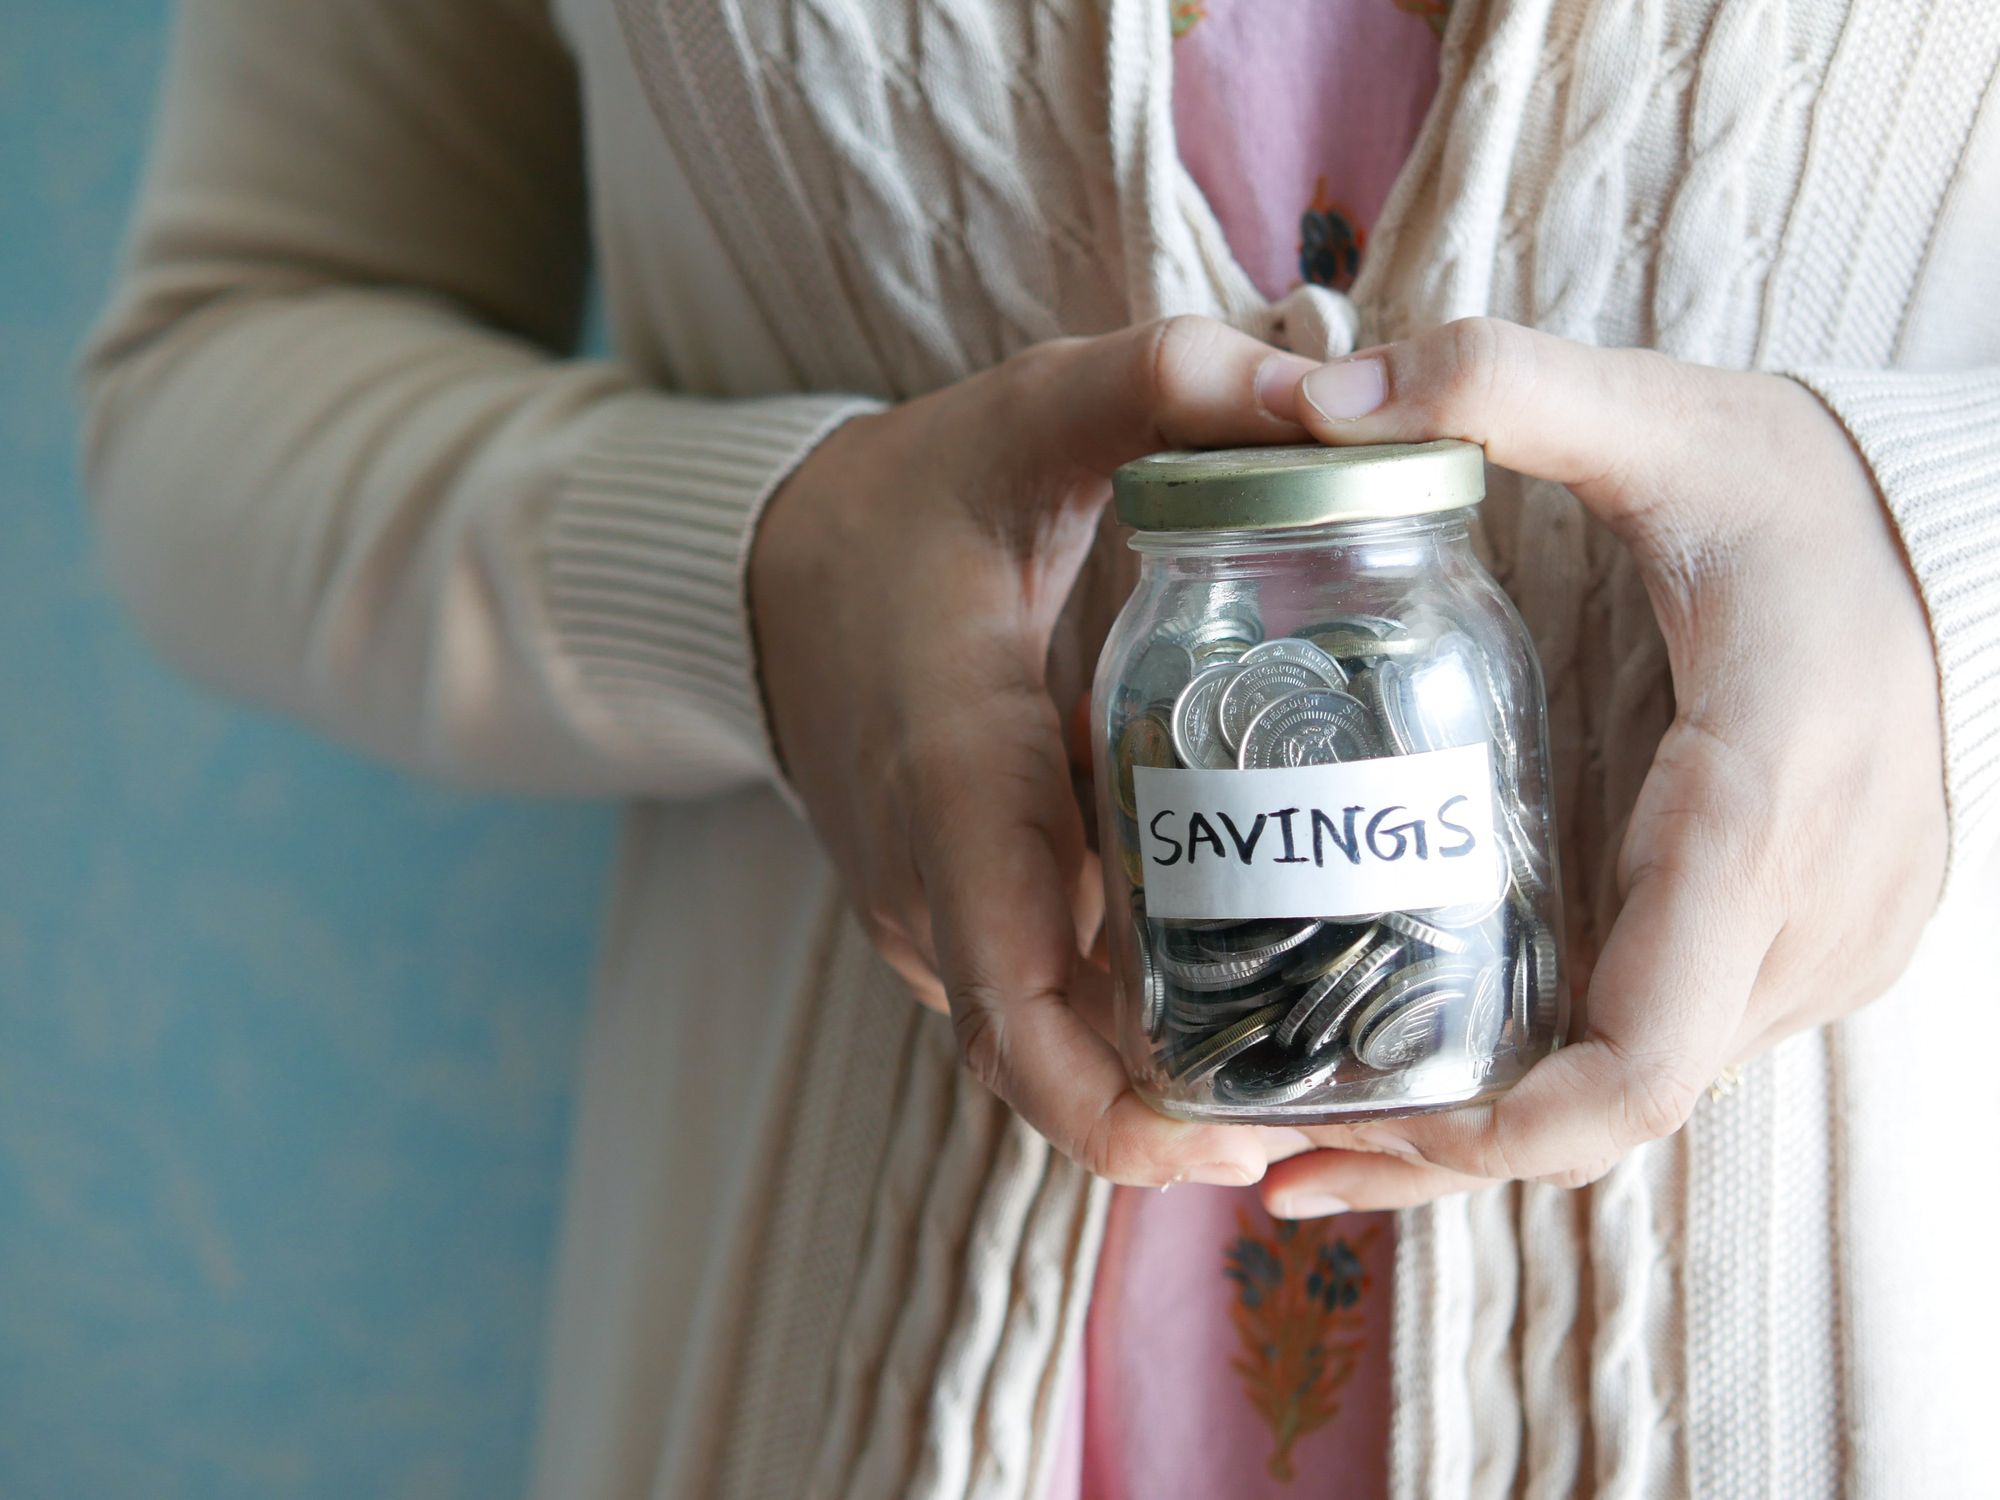 Person holding a "savings" jar